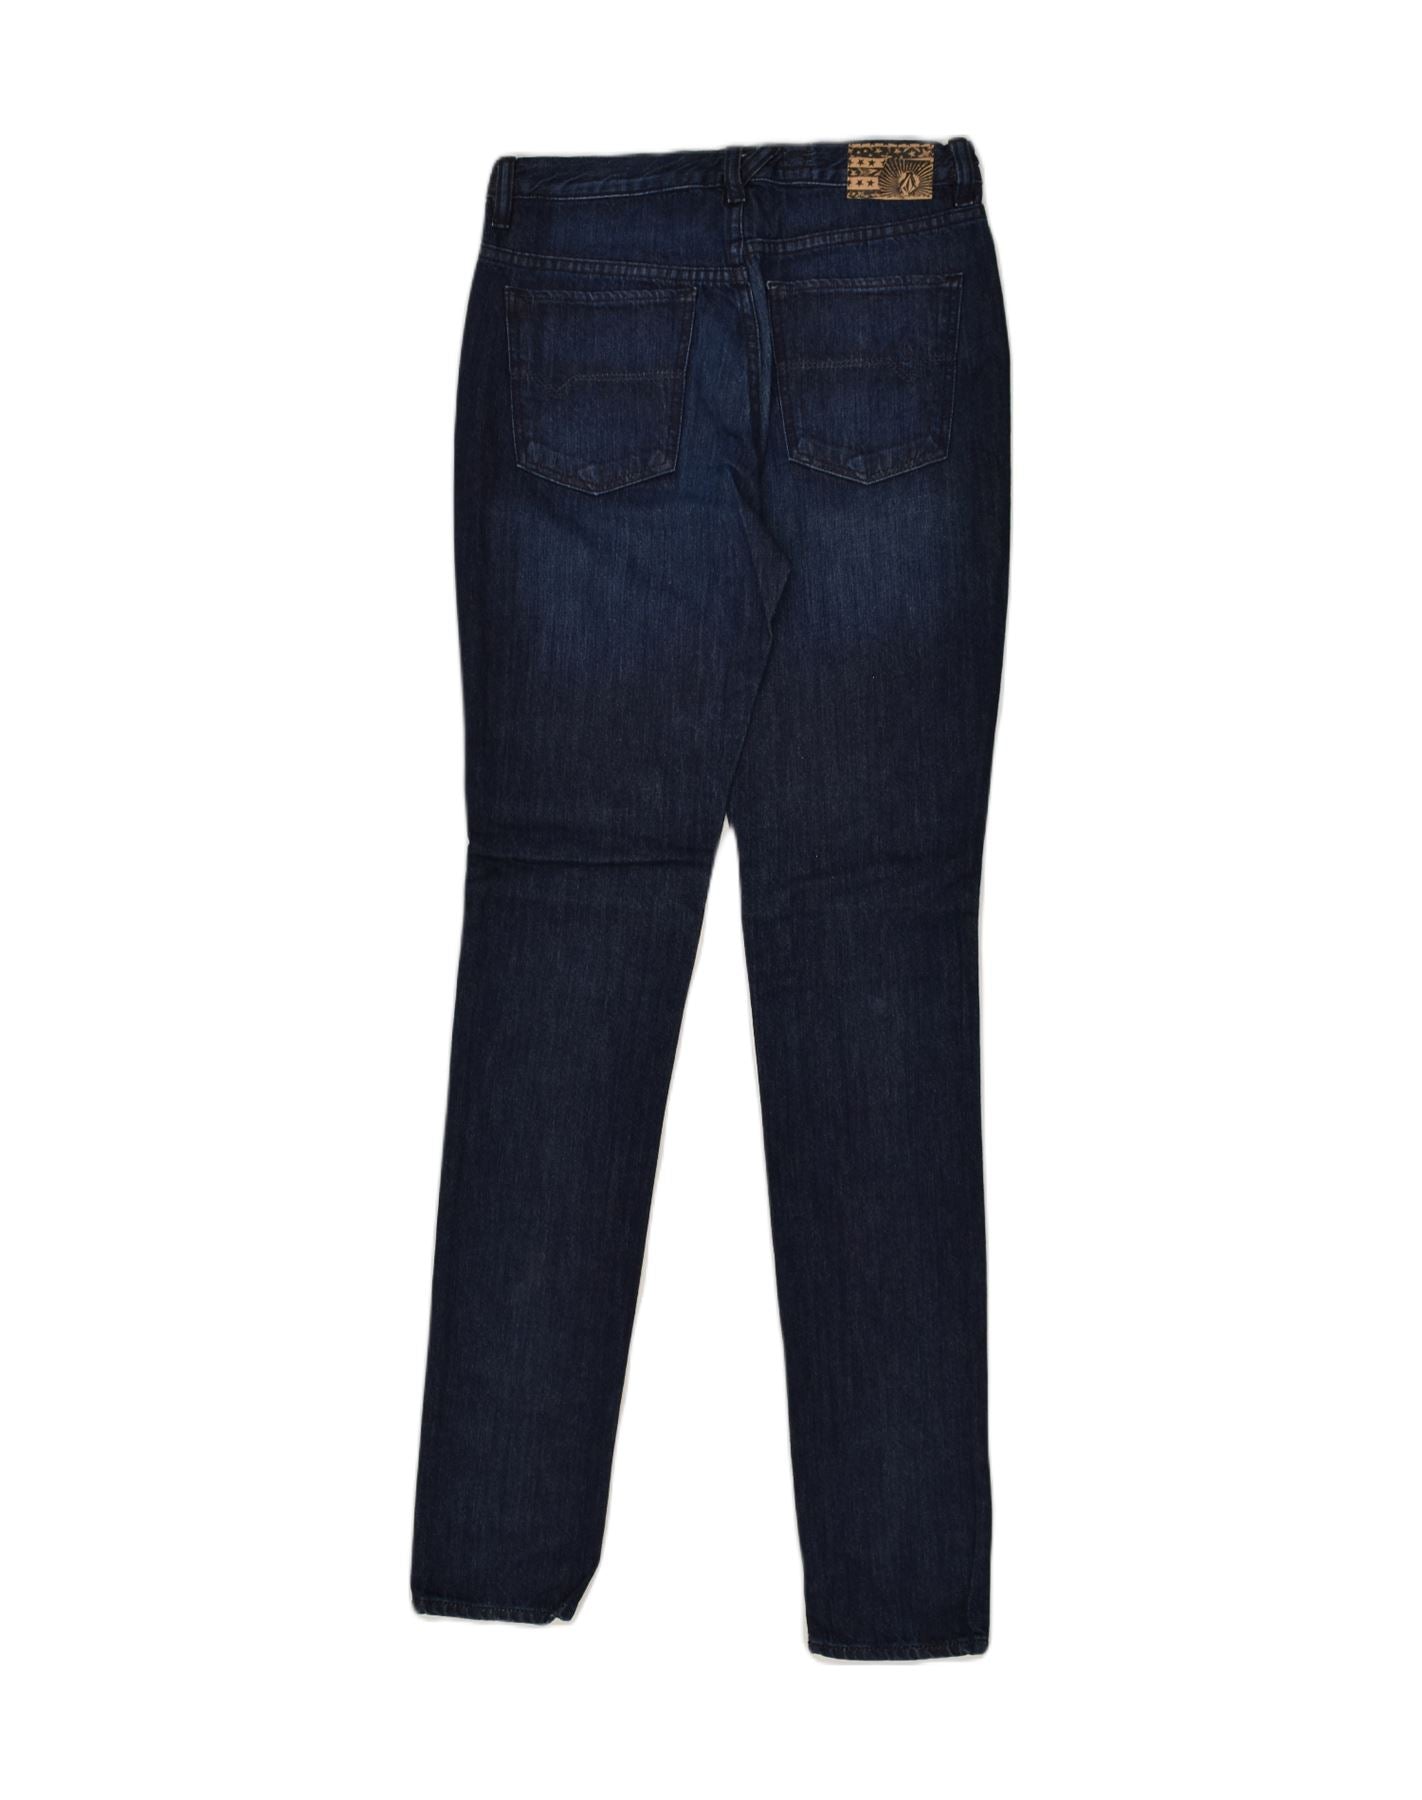 Volcom Brand Jeans – Volcom US